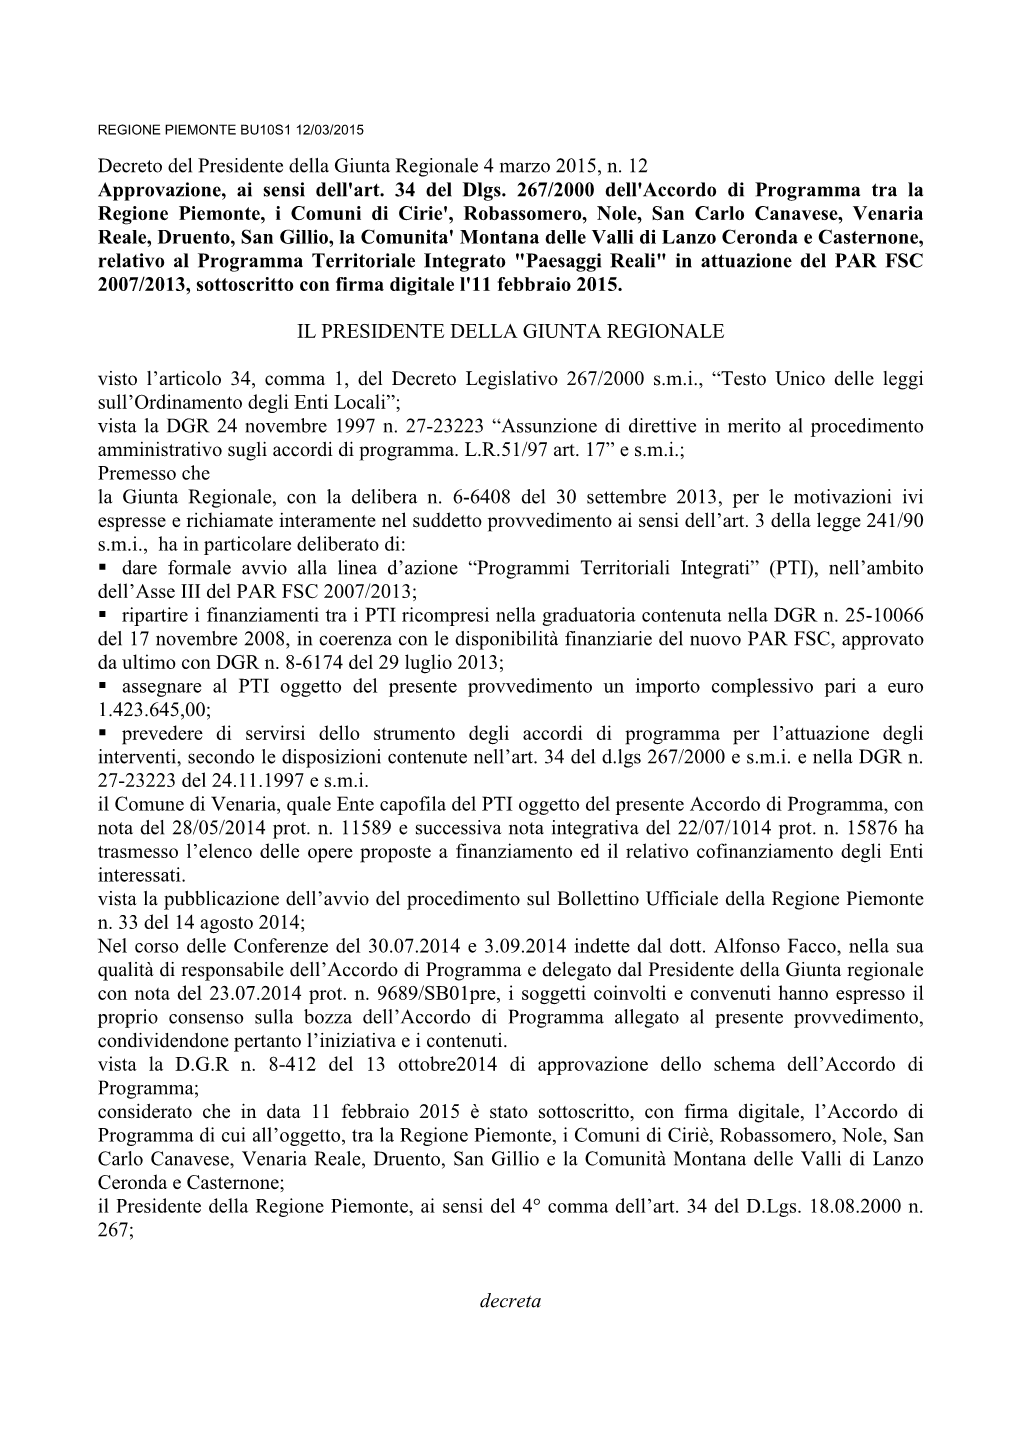 Decreto Del Presidente Della Giunta Regionale 4 Marzo 2015, N